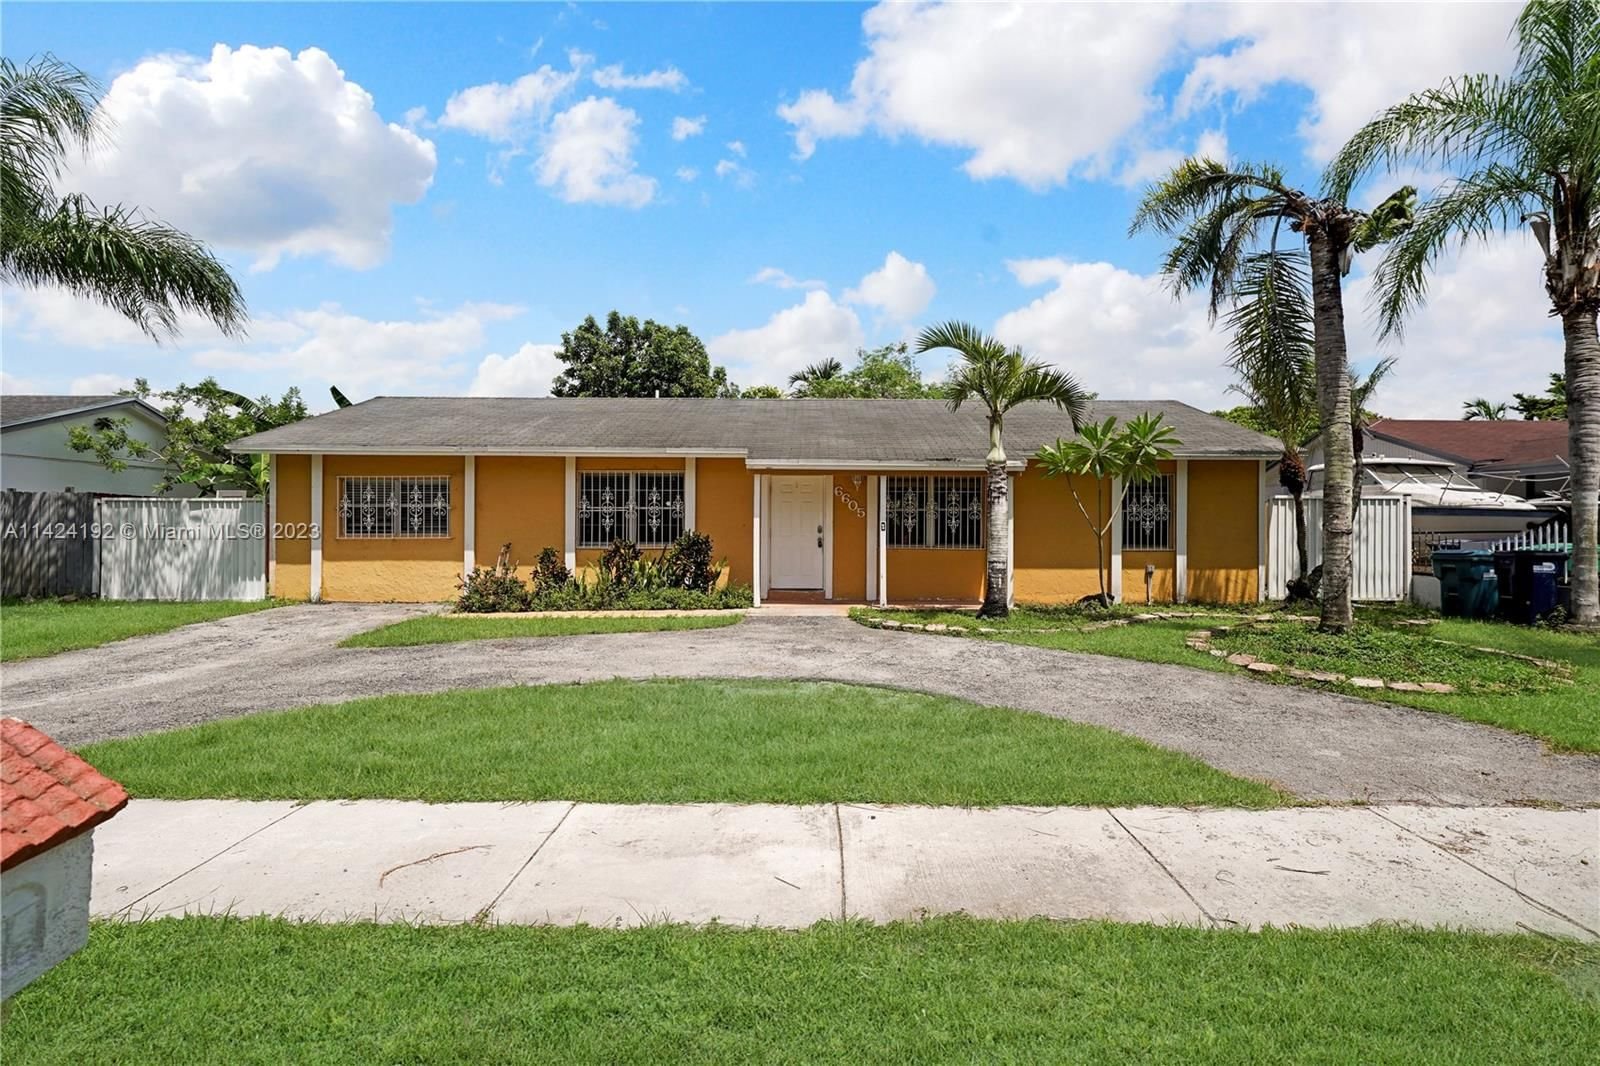 Real estate property located at 6605 151st Ct, Miami-Dade County, Miami, FL